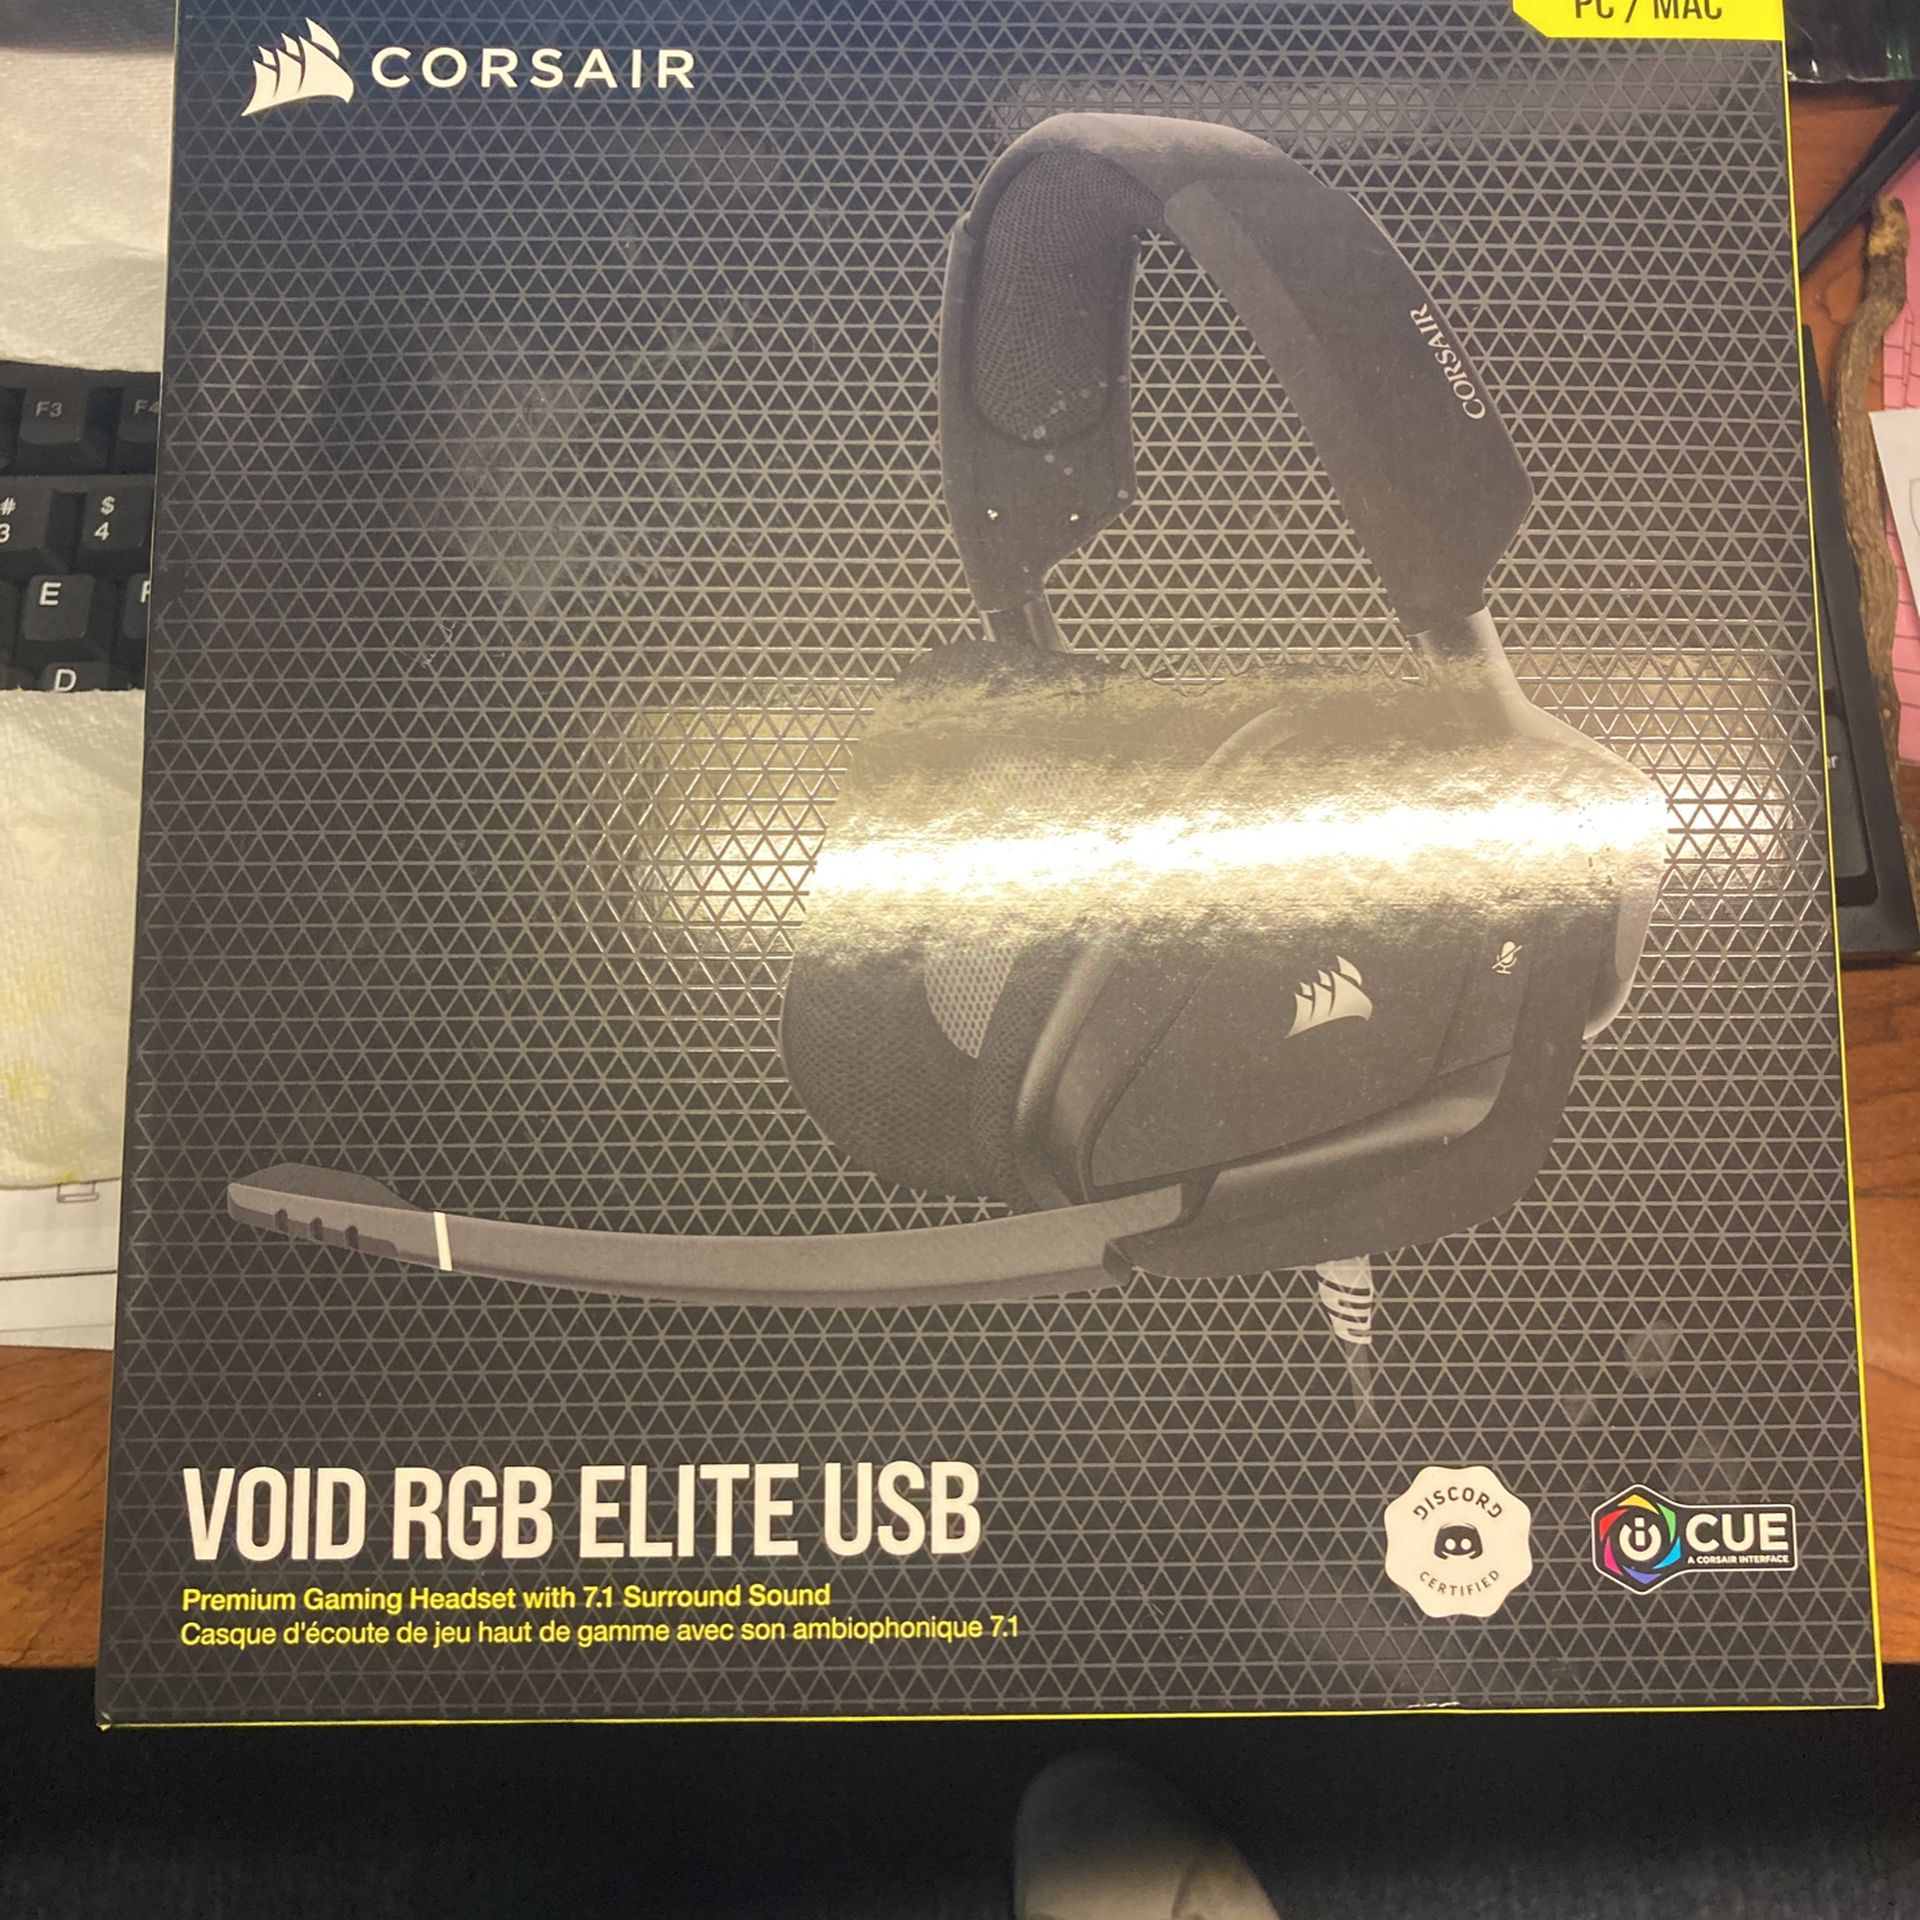 Cosair Void RGB Elite USB Headphones 